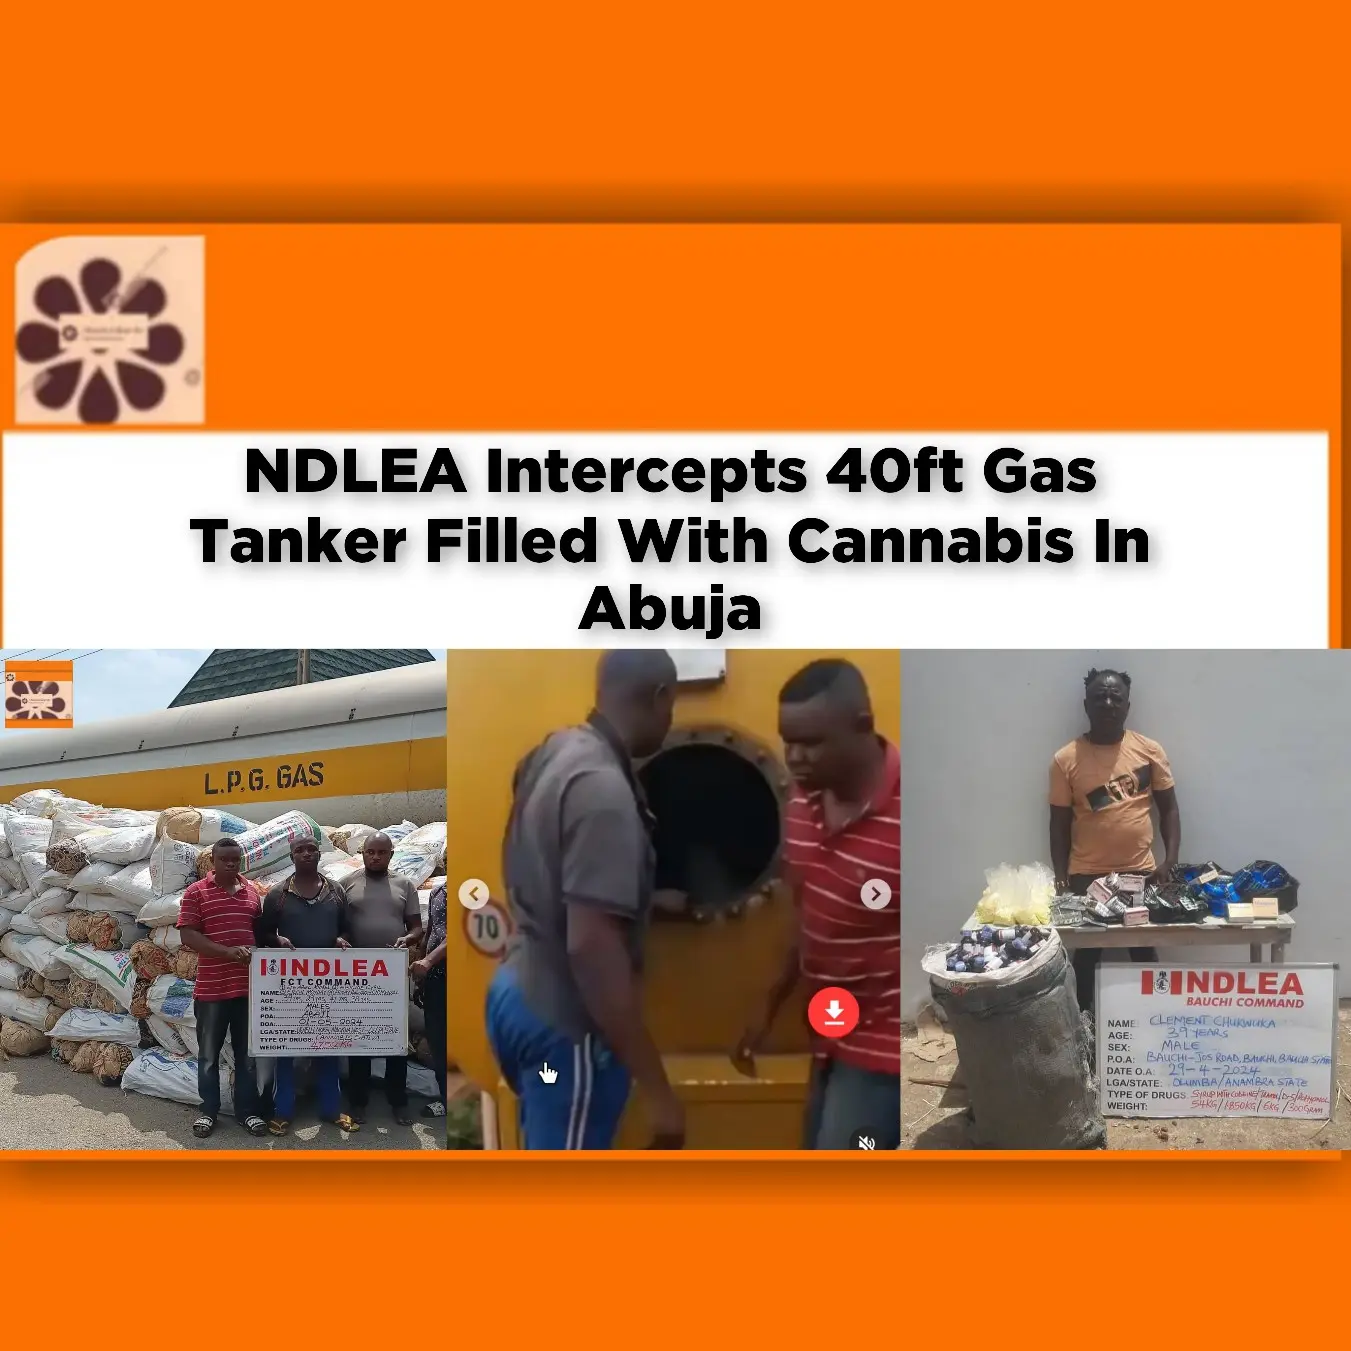 NDLEA Intercepts 40ft Gas Tanker Filled With Cannabis In Abuja ~ OsazuwaAkonedo #Obidients